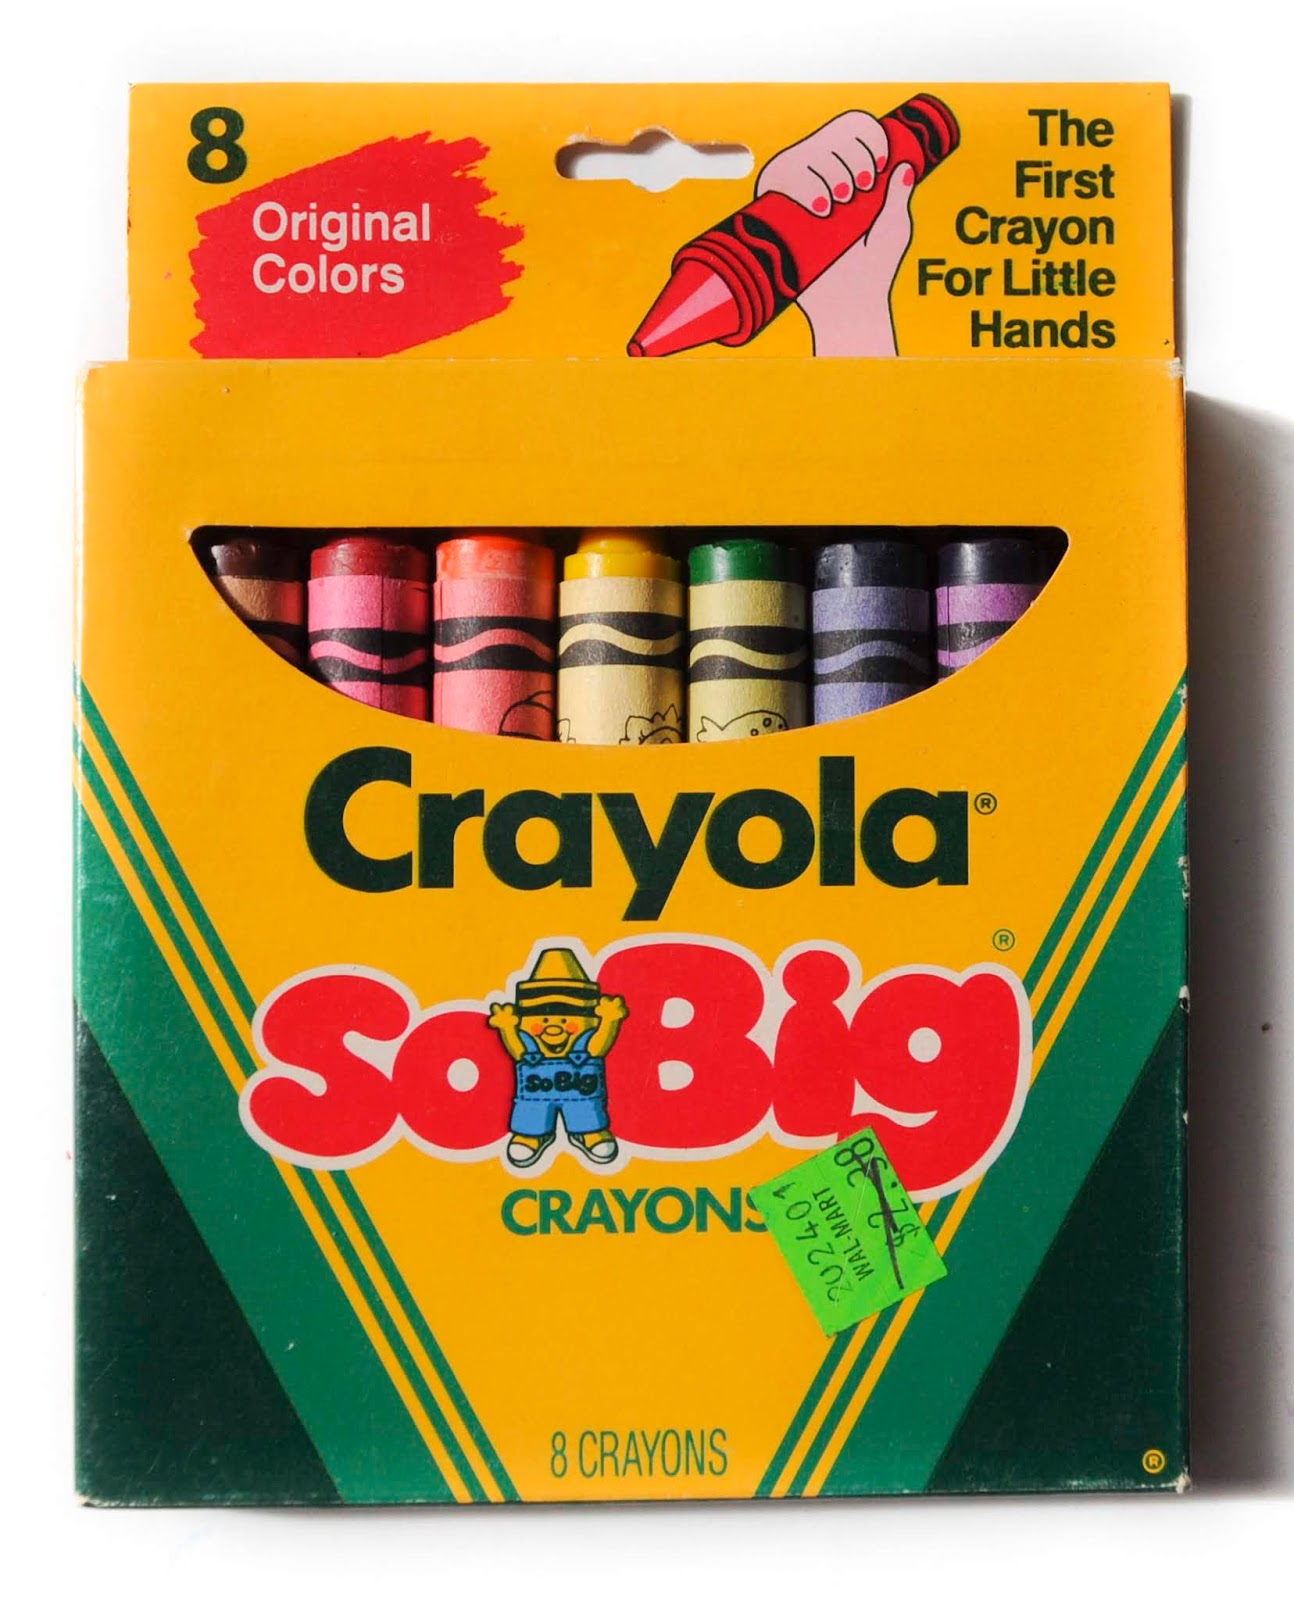 Crayola Crayons, Washable, Large, 8 crayons